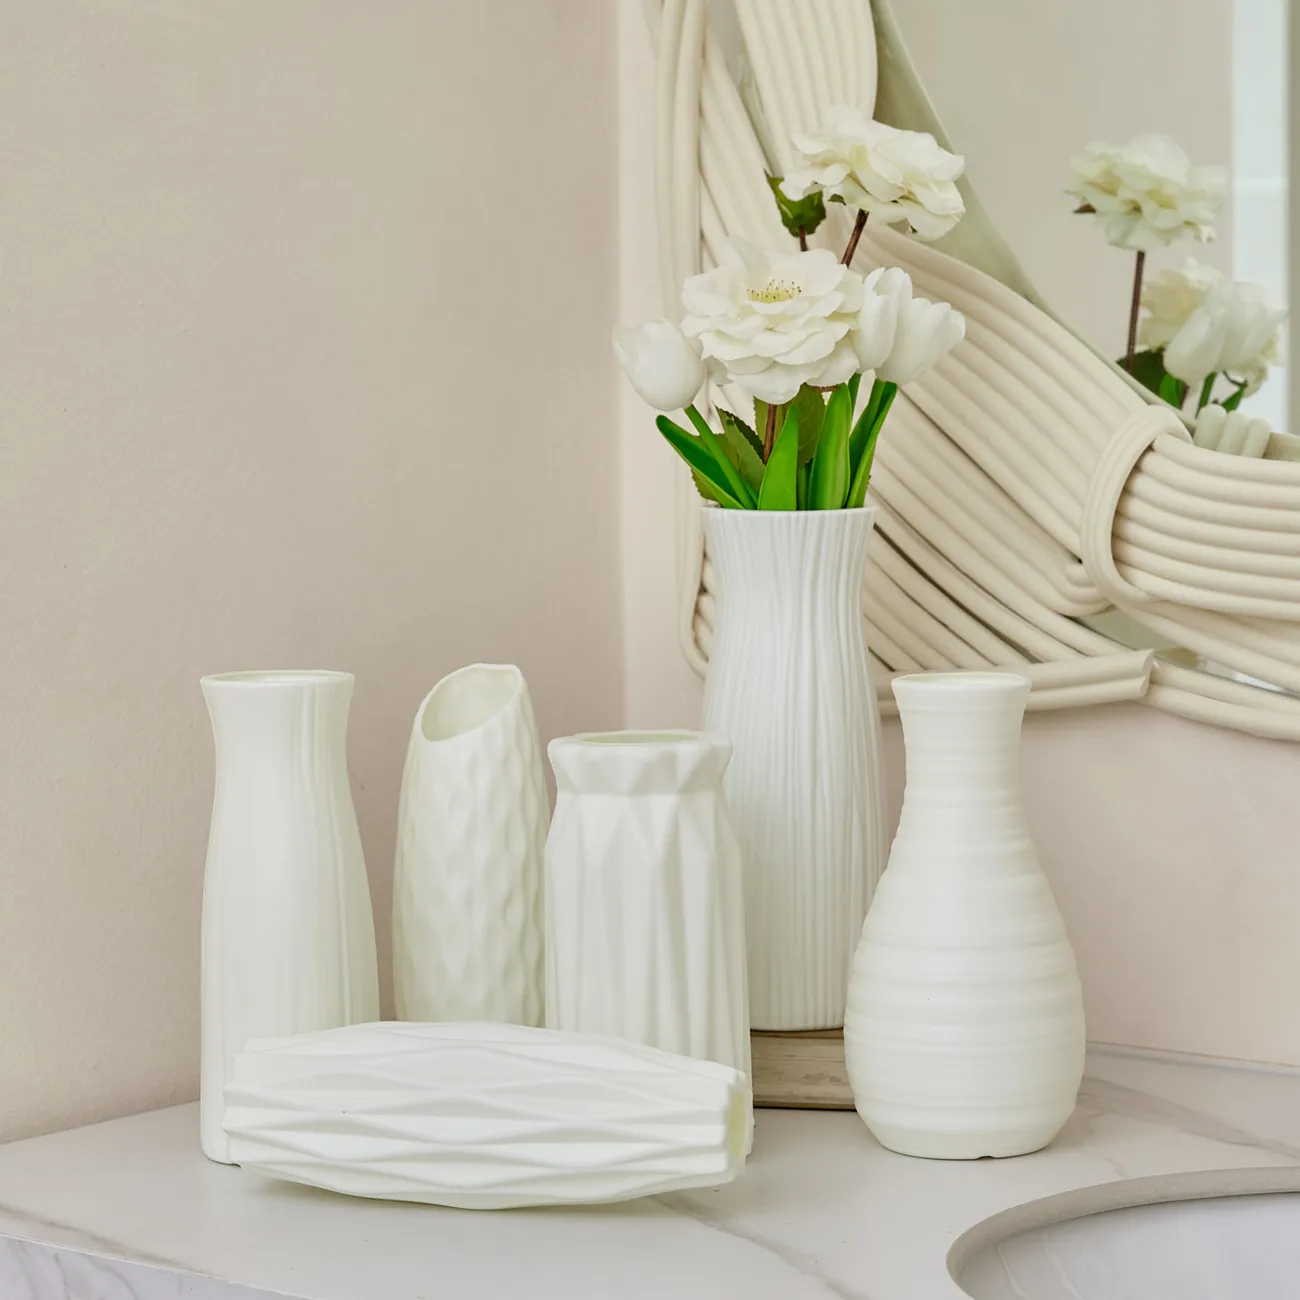 Ceramic look white plastic flower vase estilo geométrico irrompible decor vase for flower home office table decor Blanco big image 1